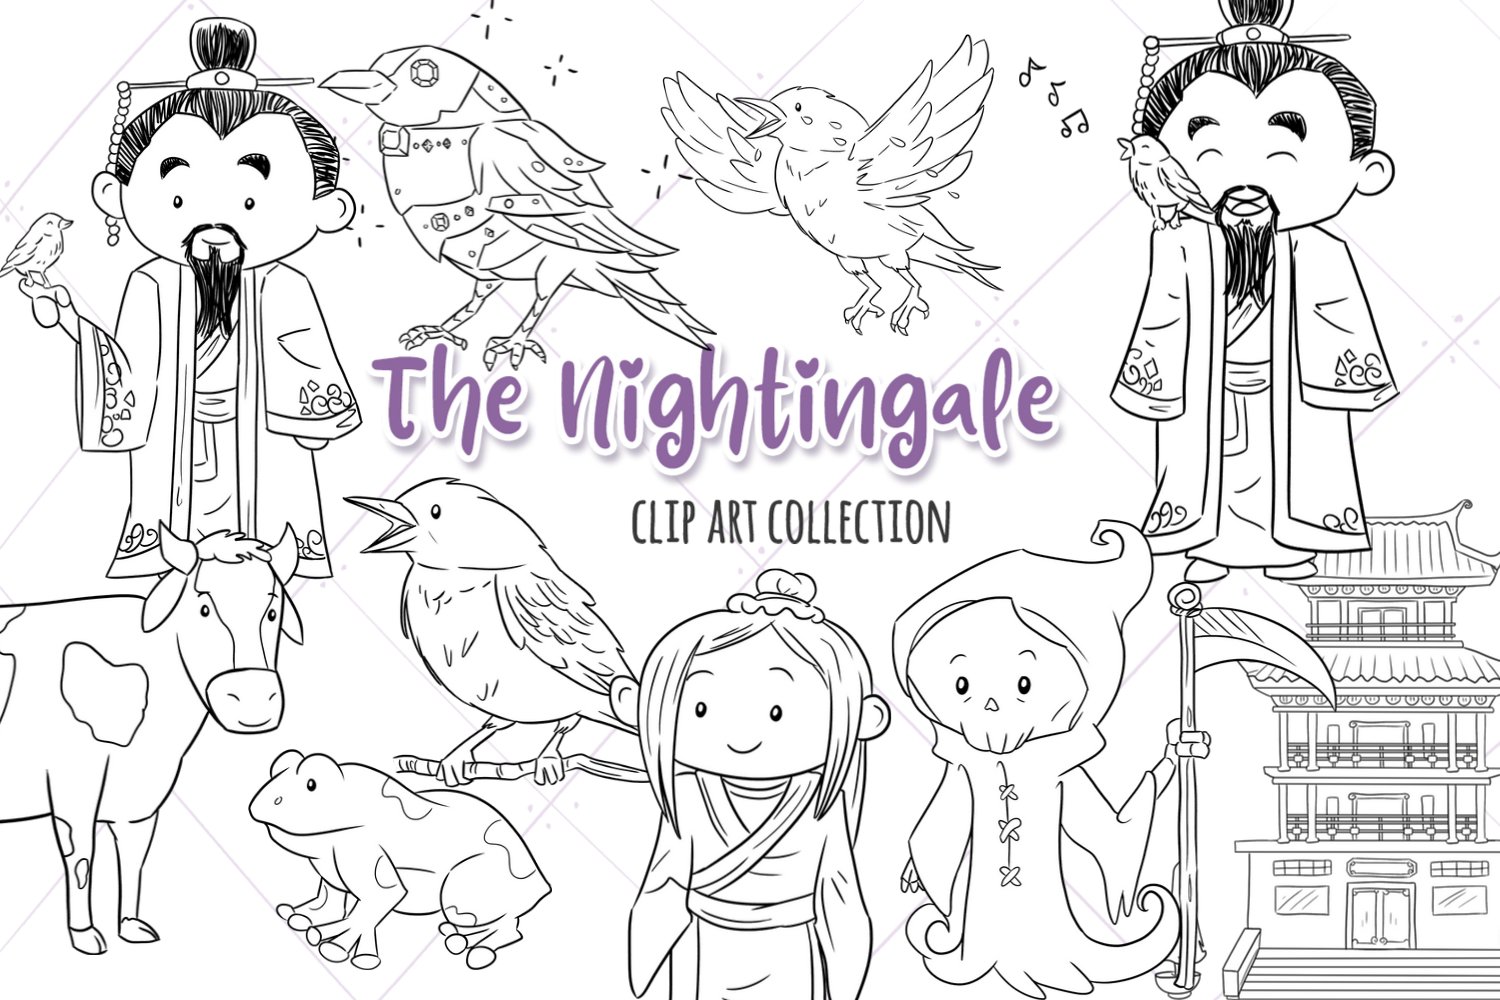 Outline Kawai characters with nightingale.